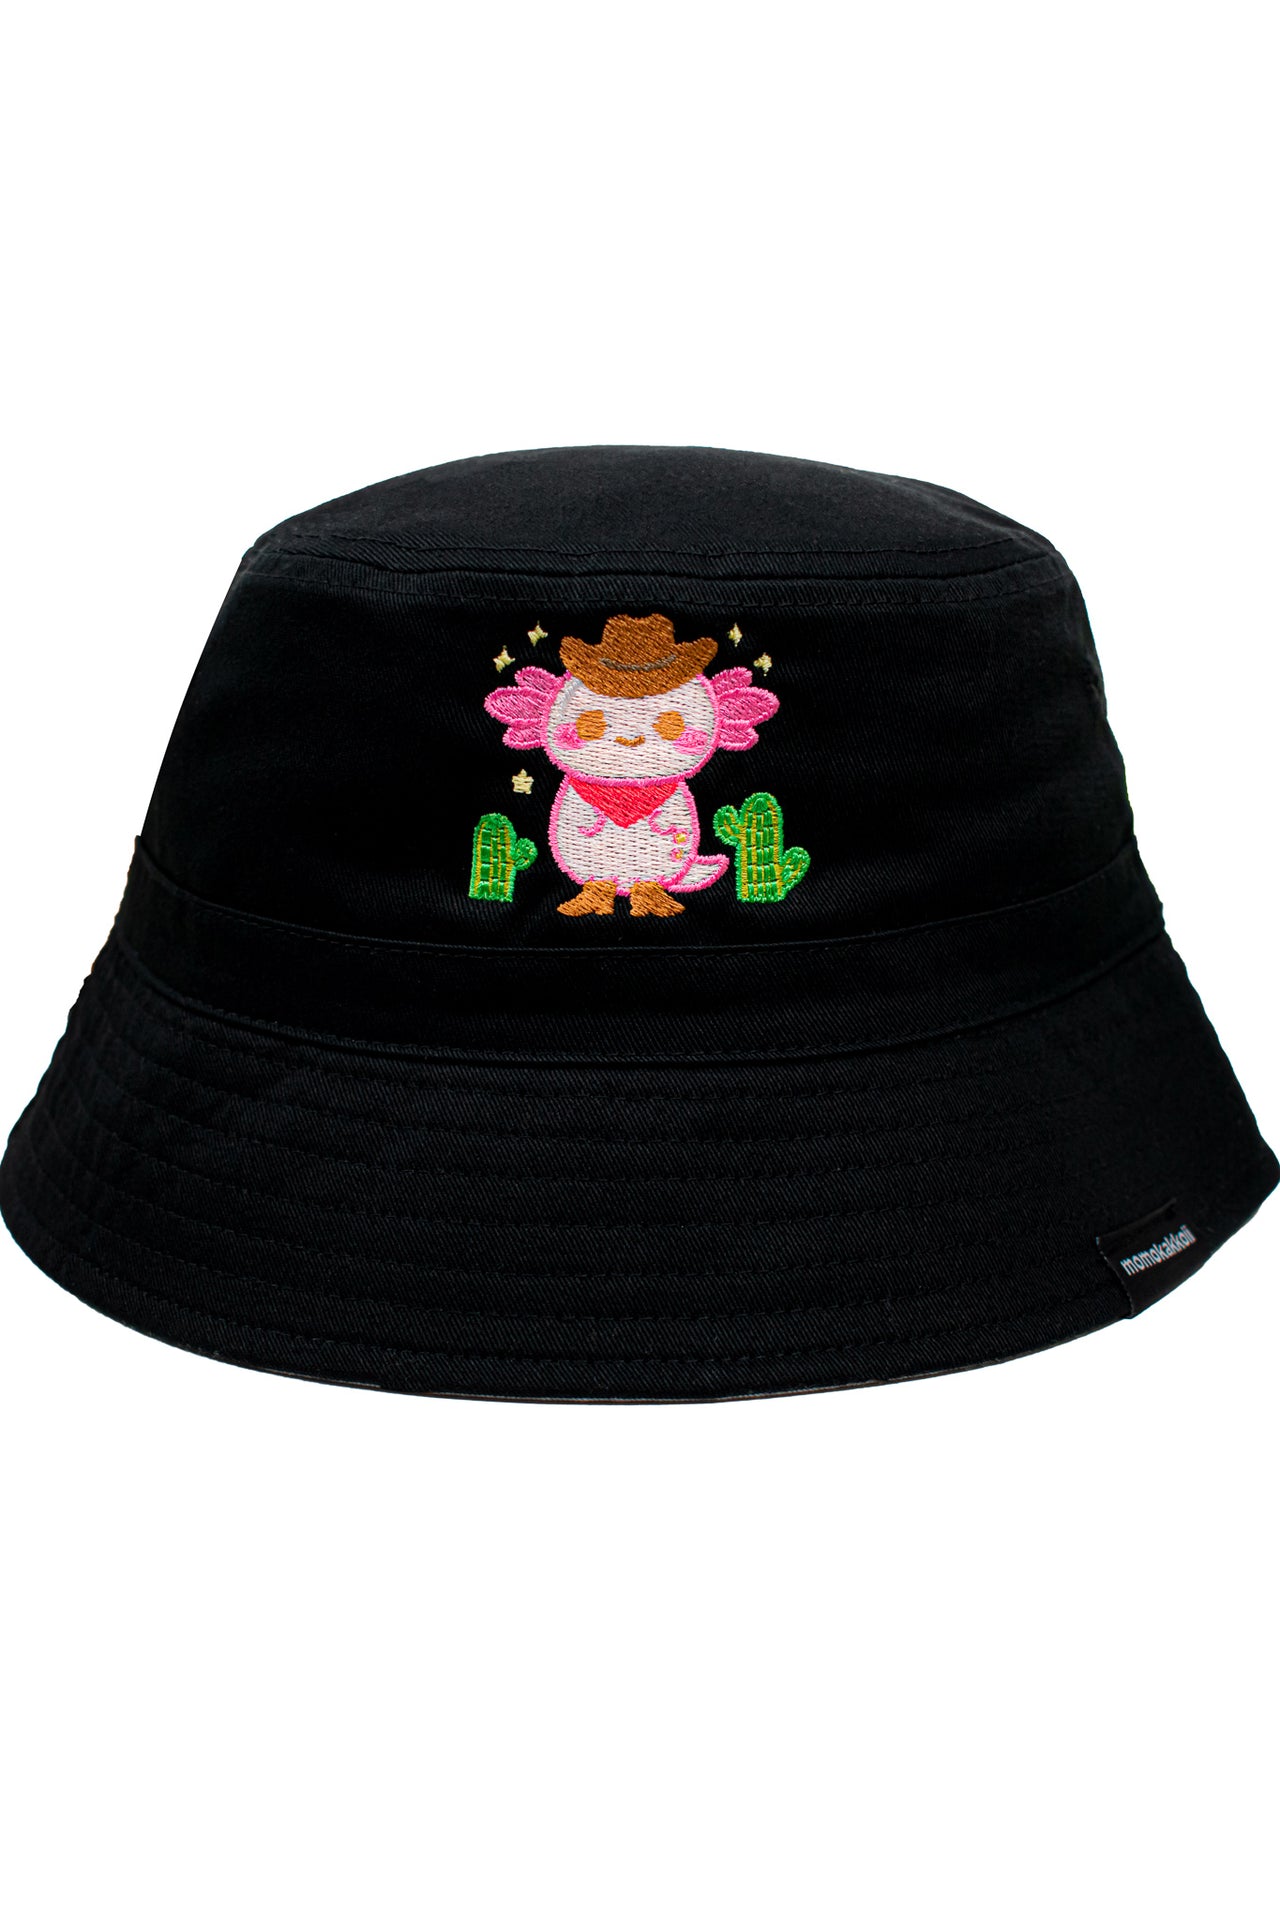 Xoxi The Axolotl Cowboy Embroidered Bucket Hat